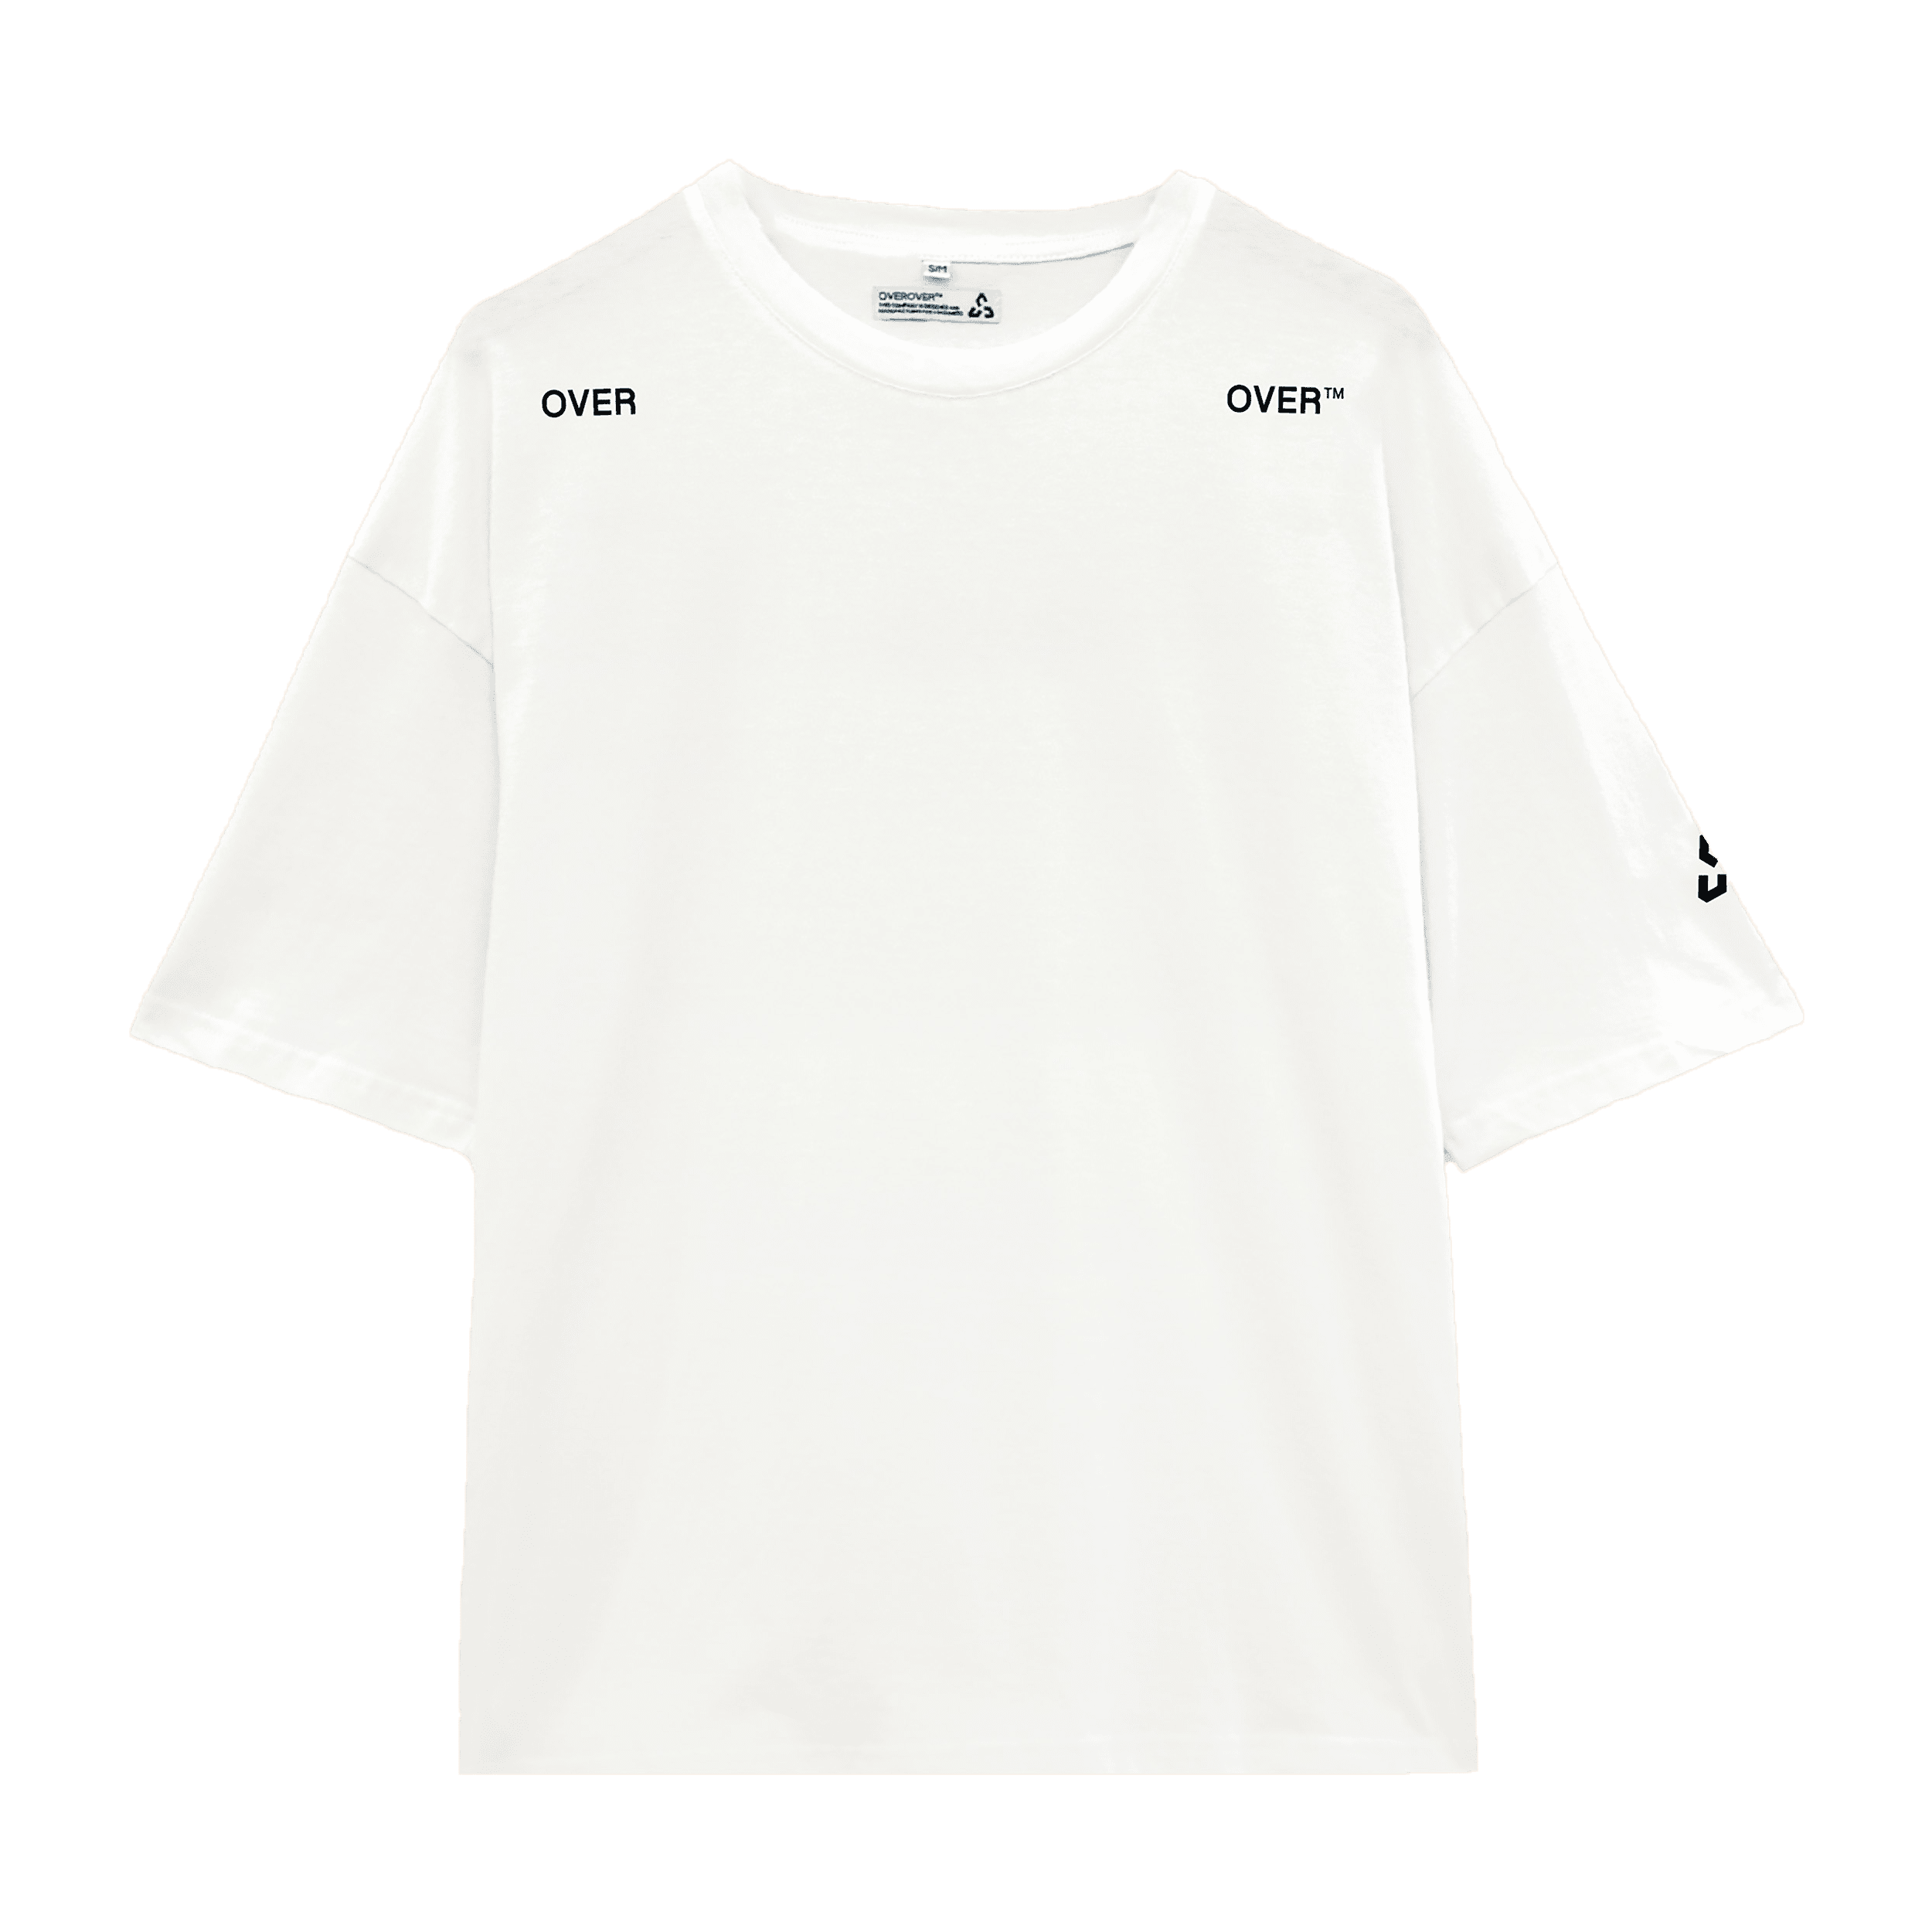 overover-white-garment-front kopiera